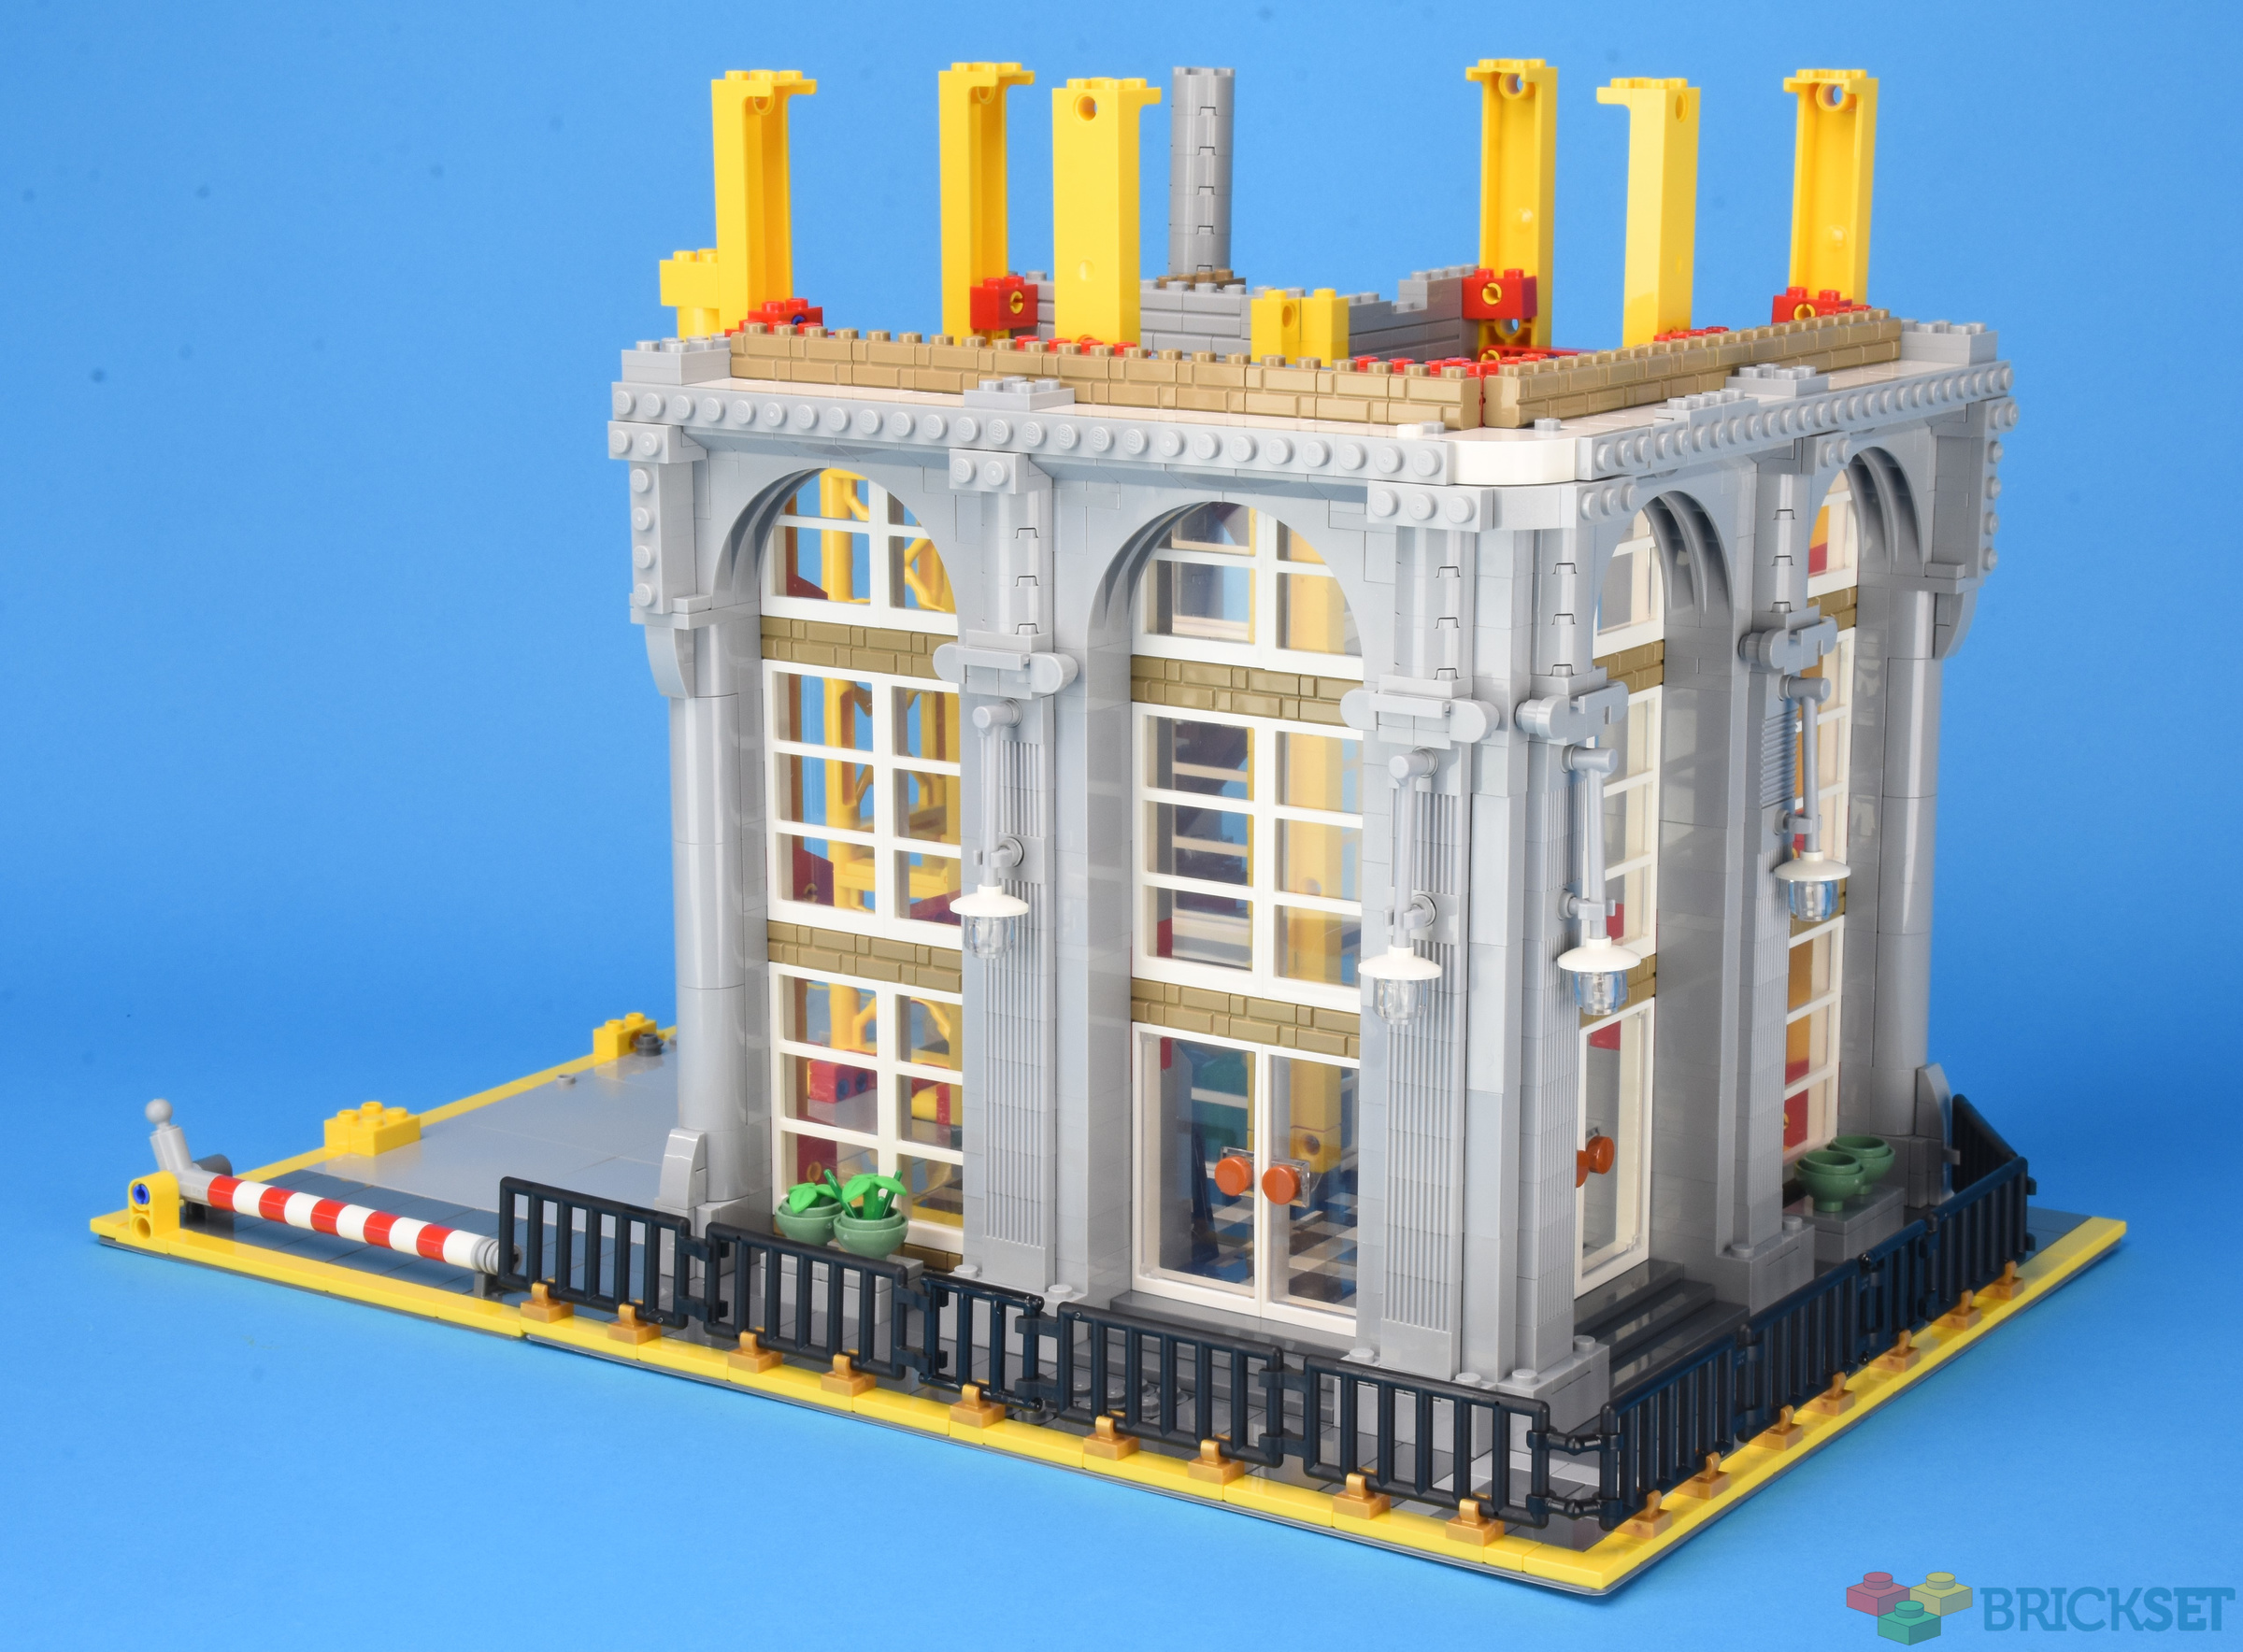 LEGO 910008 Modular Construction Site review | Brickset